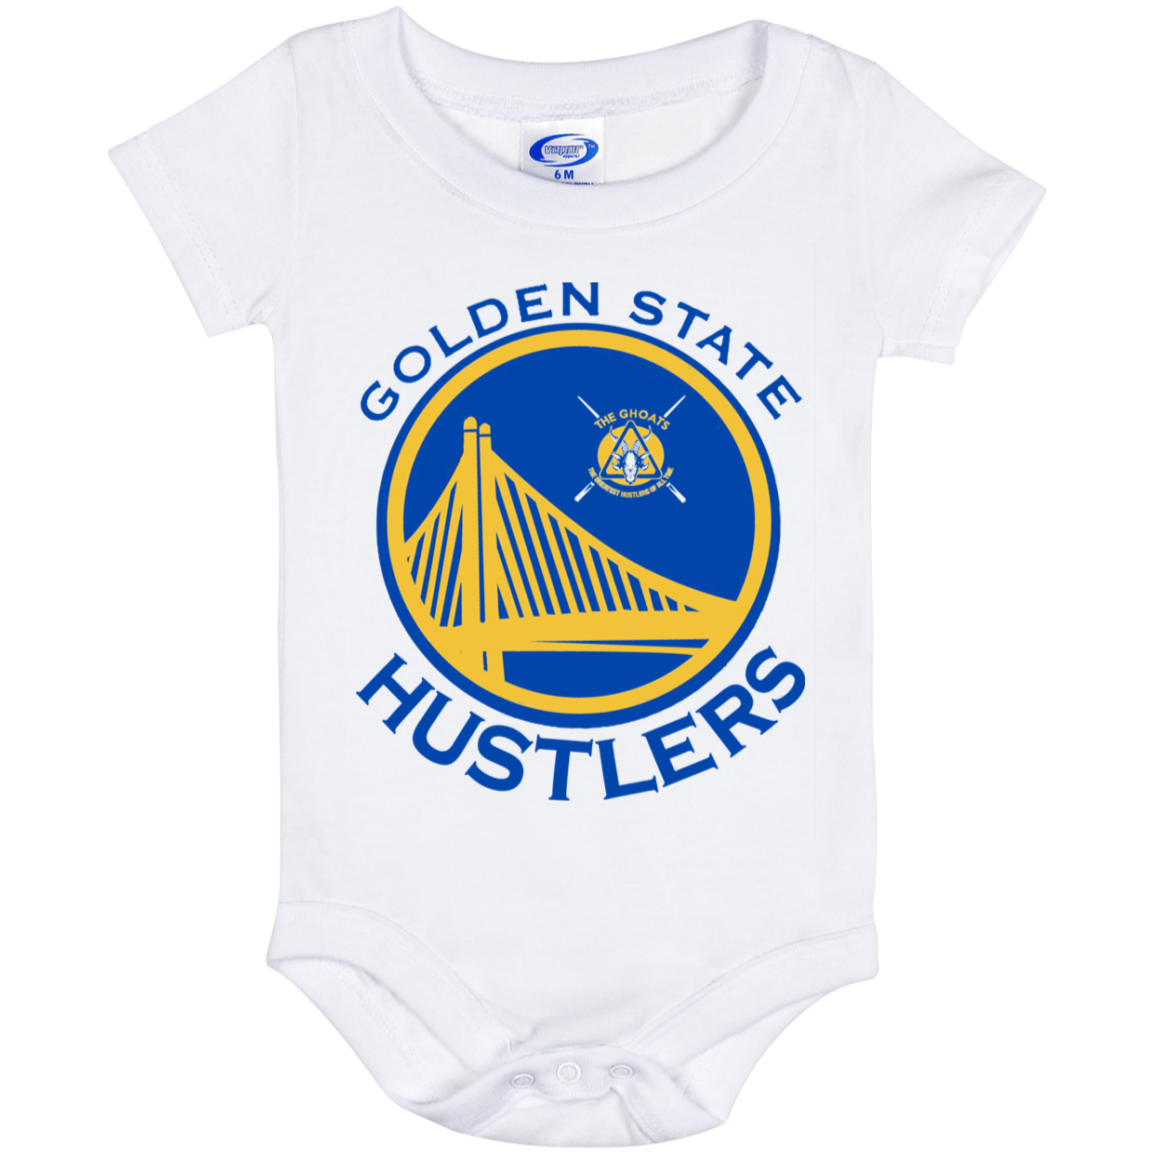 The GHOATS Custom Design. #12 GOLDEN STATE HUSTLERS.	Baby Onesie 6 Month